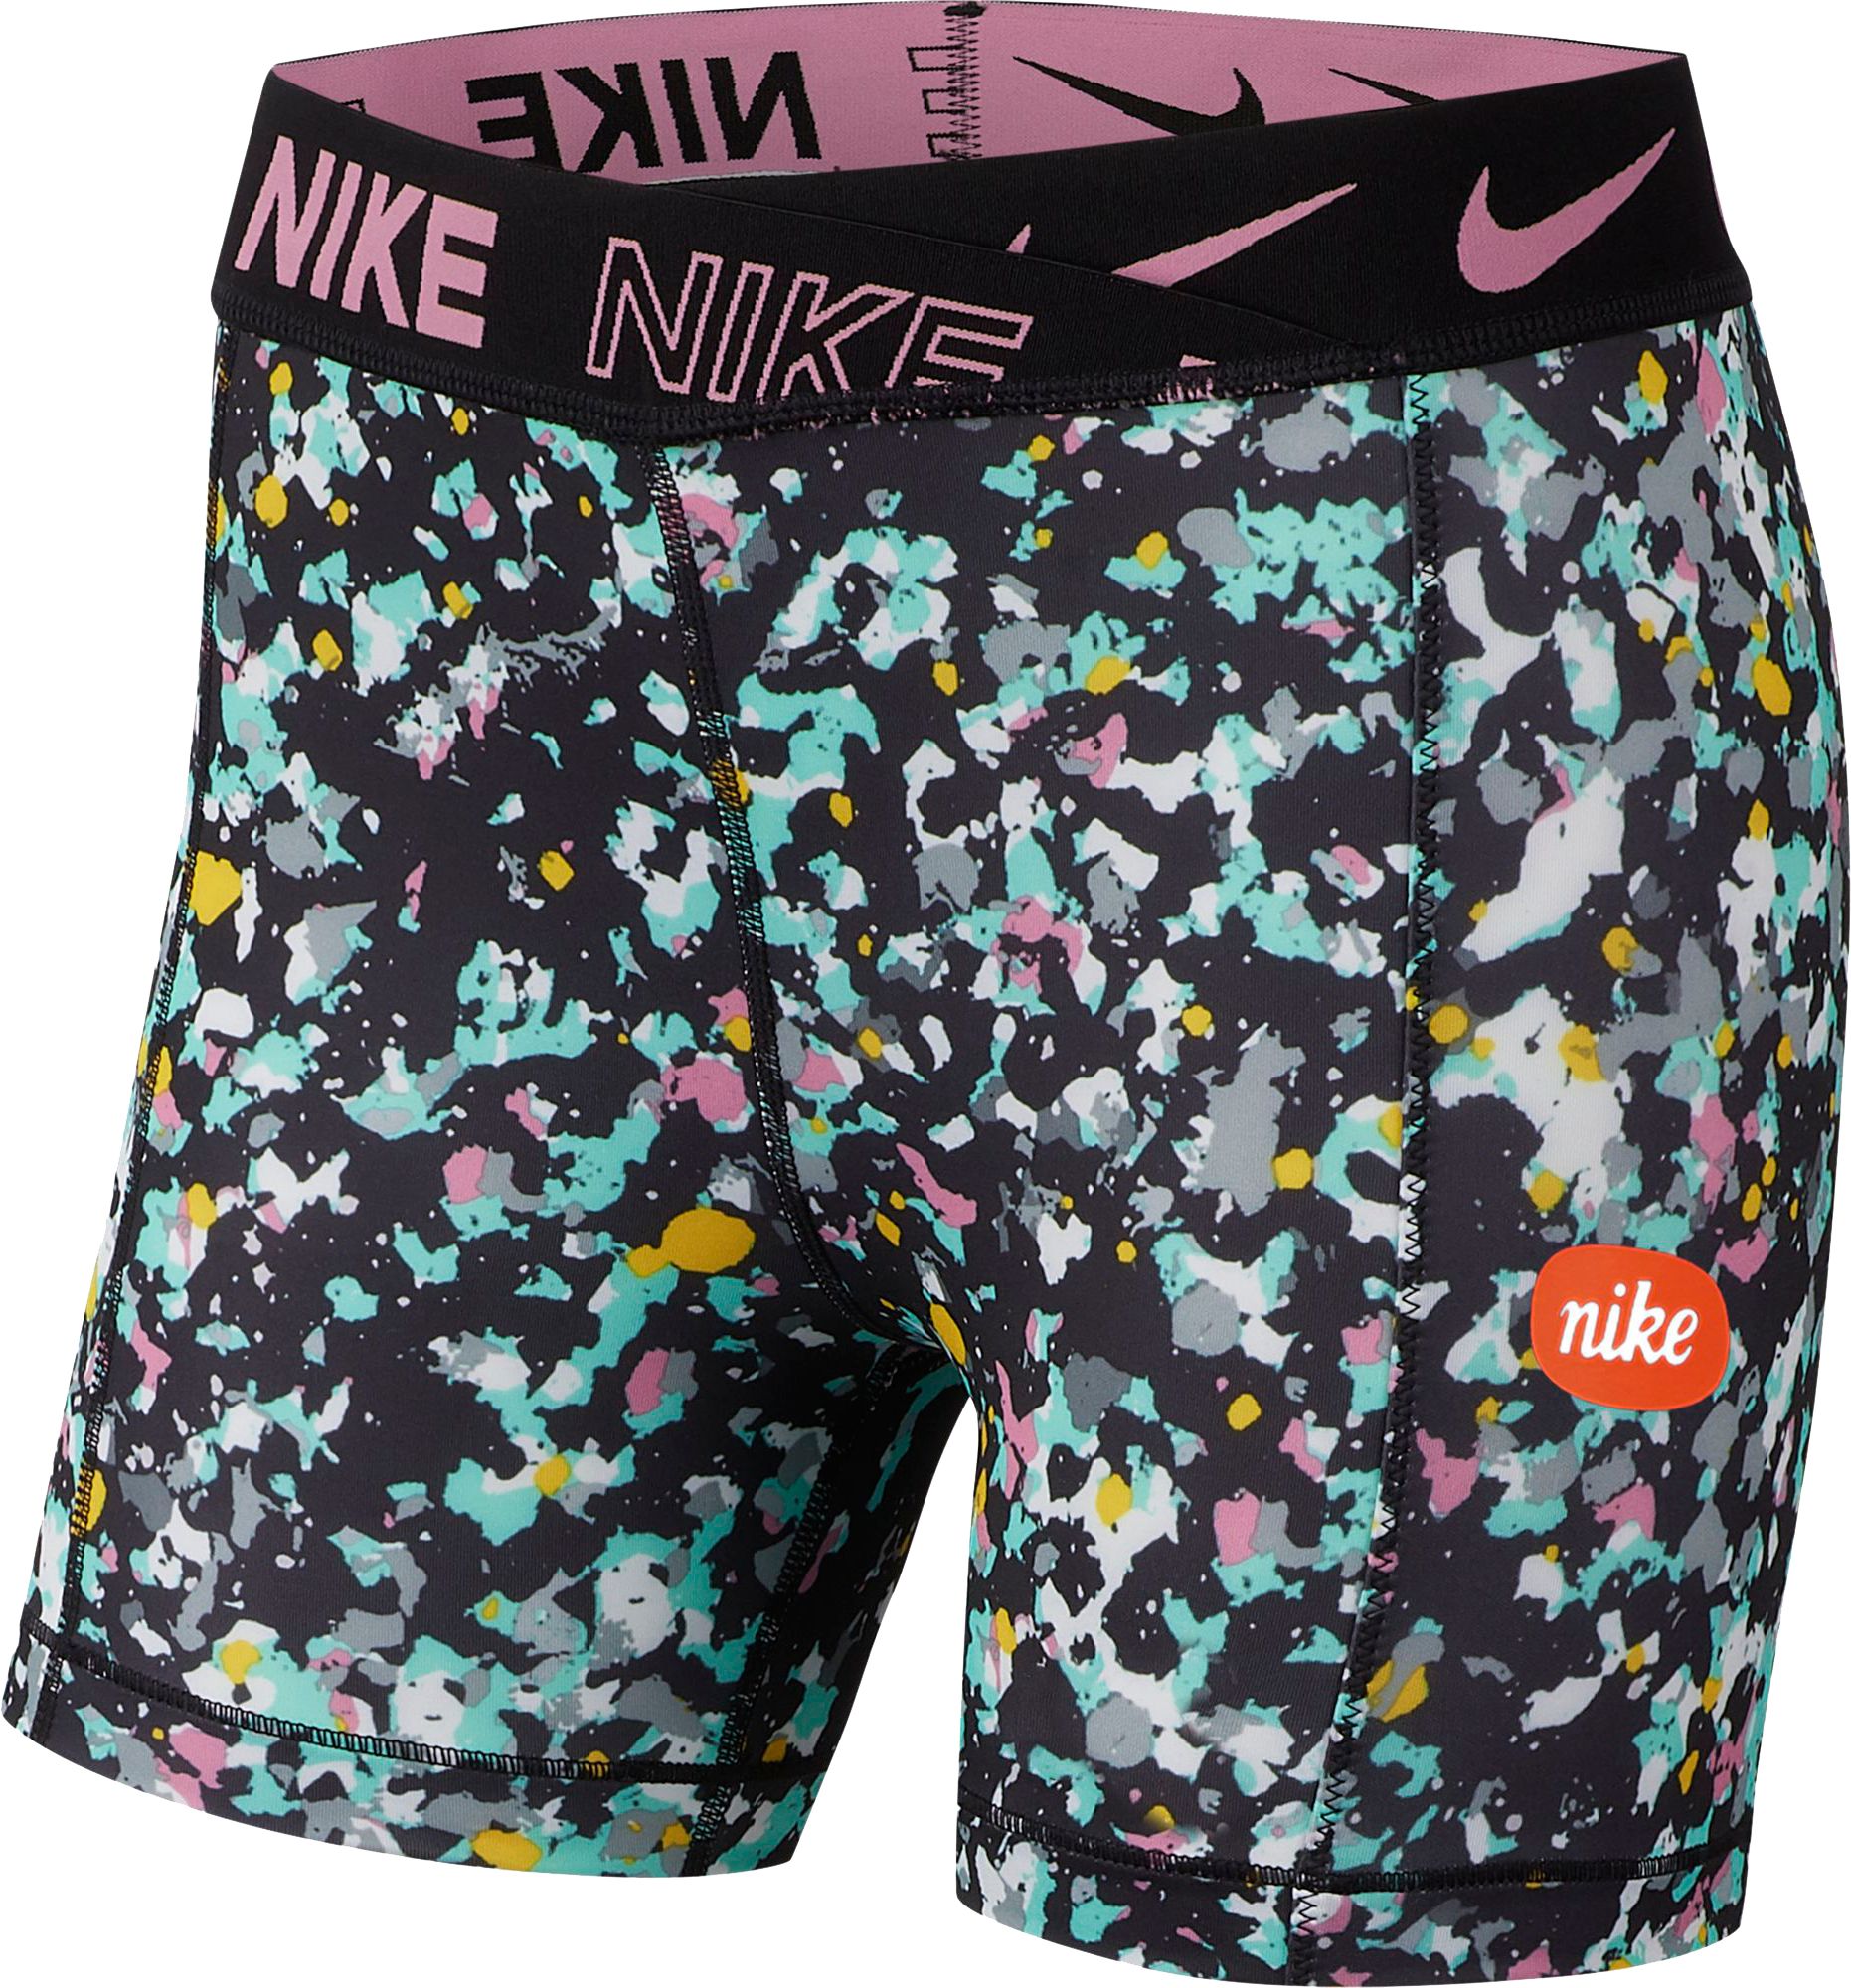 nike boy shorts on sale